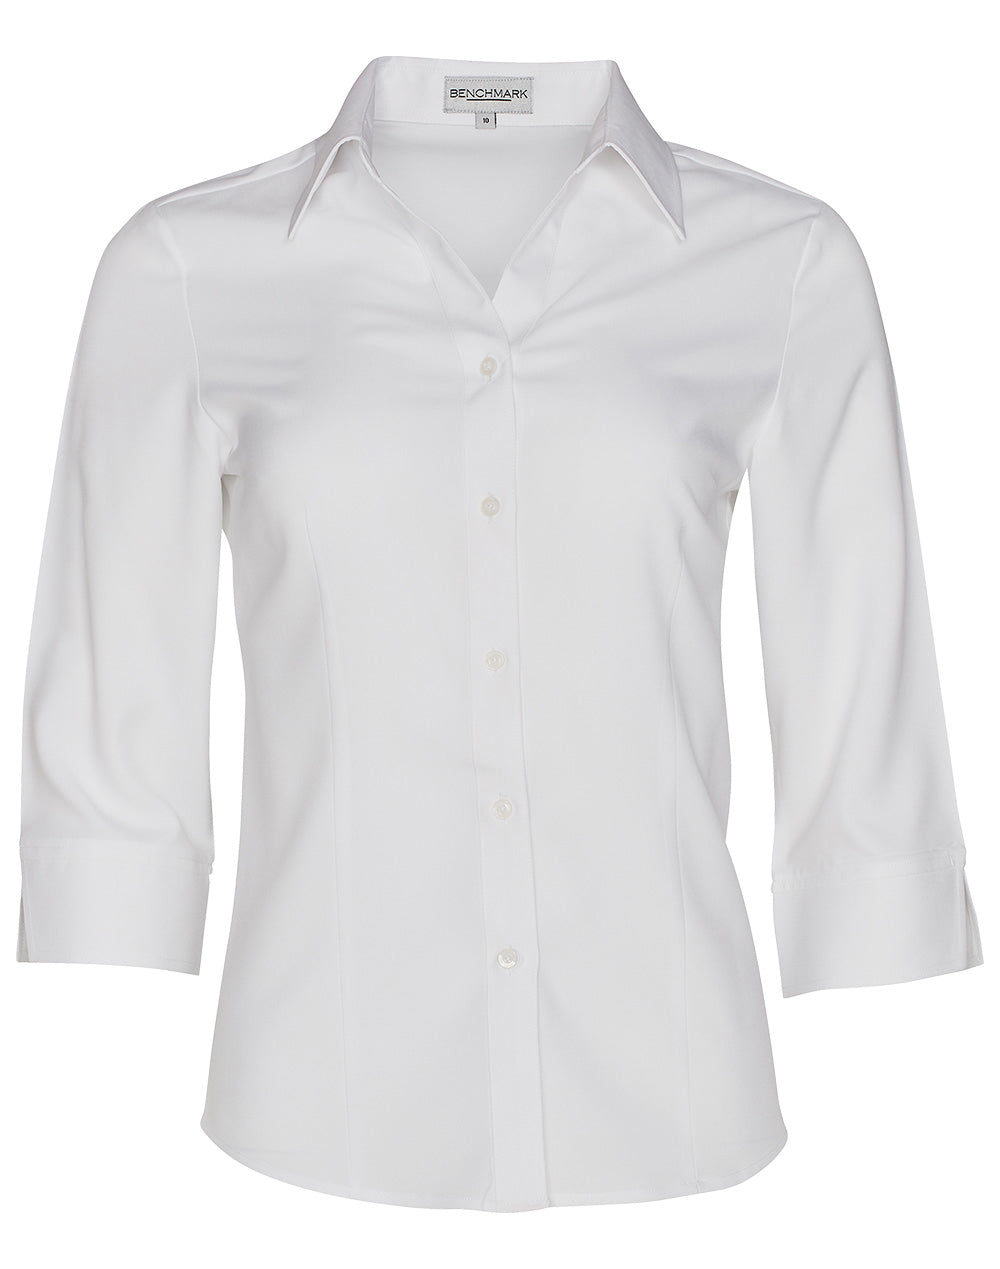 Winning Spirit Women's CoolDry 3/4 Sleeve Shirt (M8600Q) 2nd color